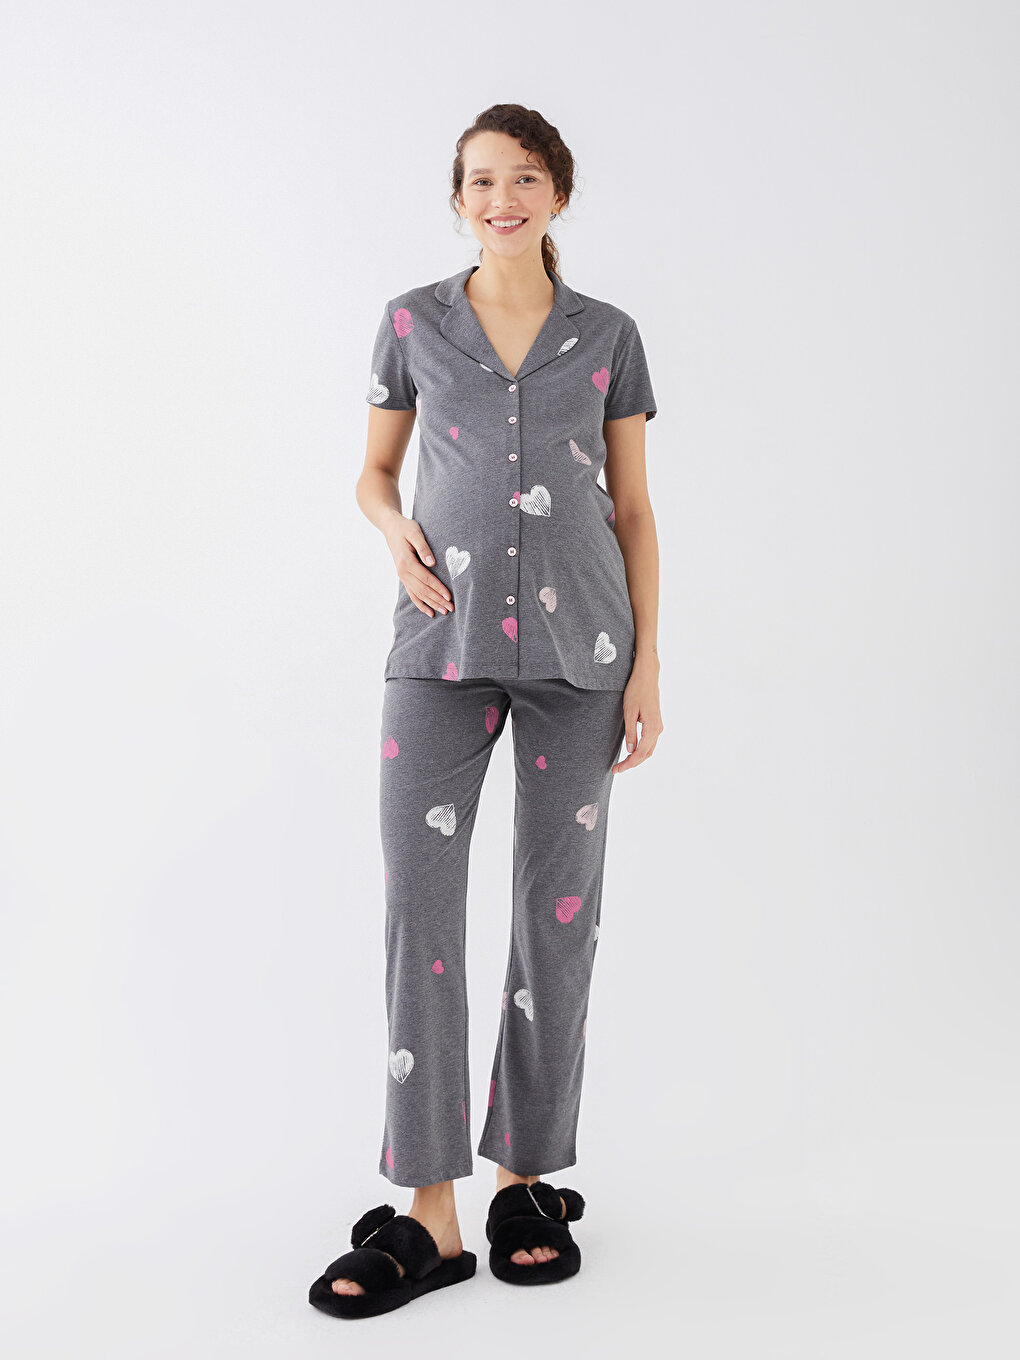 Shirt Collar Patterned Short Sleeve Maternity Pajamas Set -S36752Z8-LQ9 -  S36752Z8-LQ9 - LC Waikiki